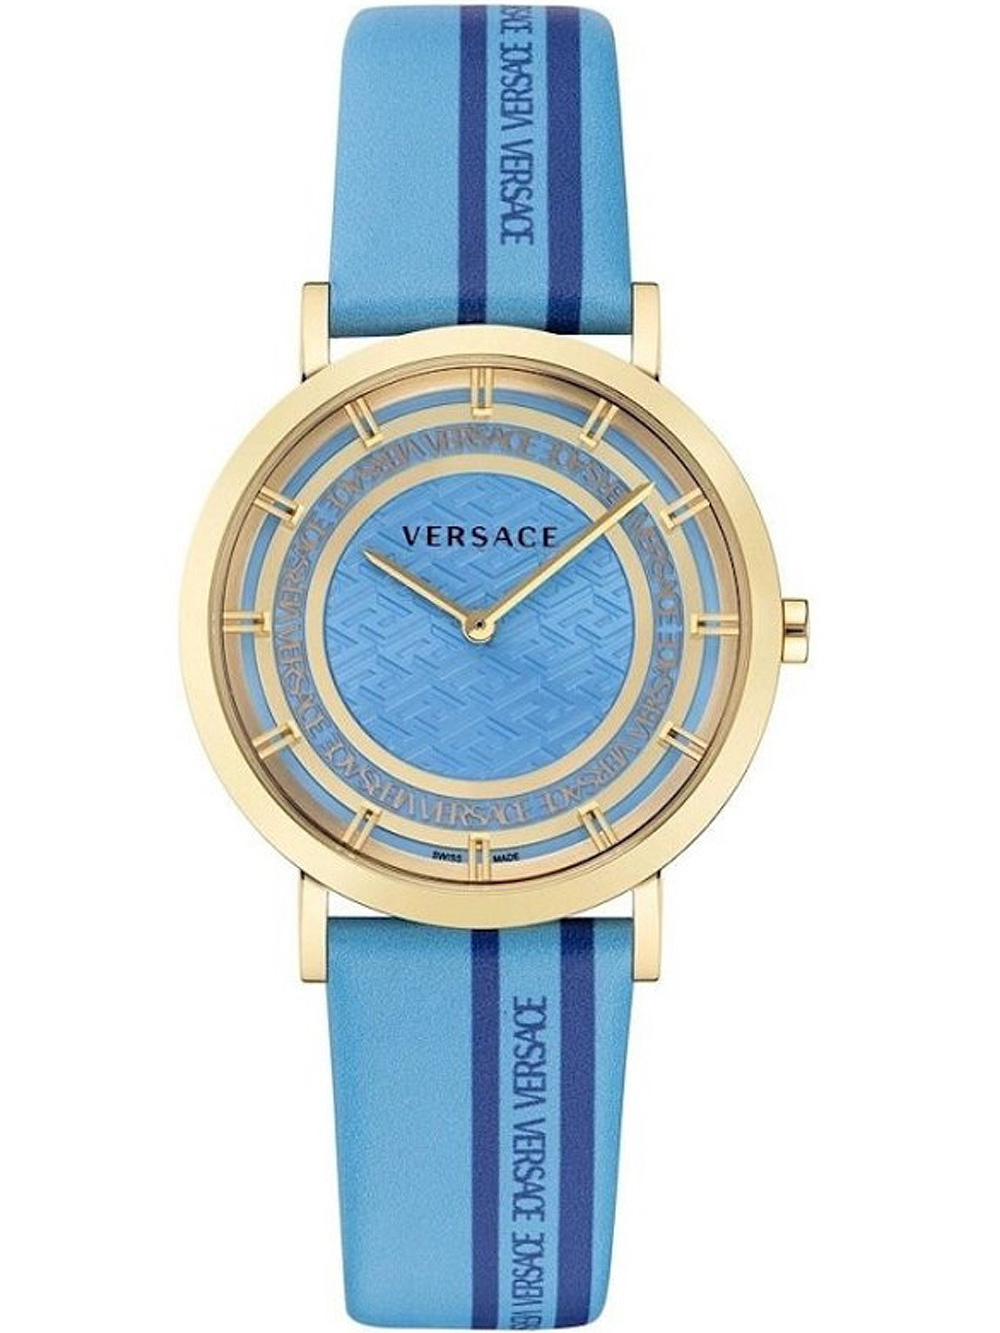 Dámské hodinky Versace VE3M00222 New Generation Ladies Watch 36mm 5ATM